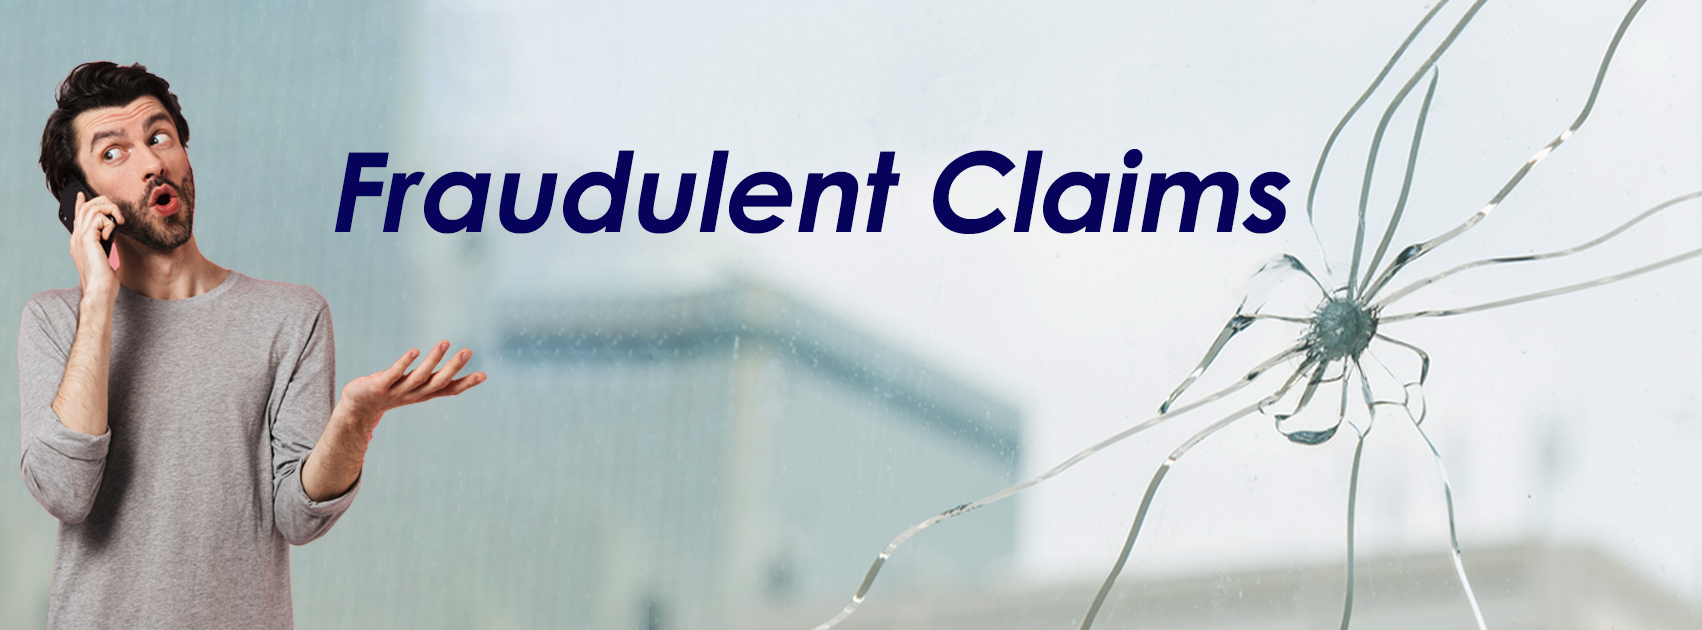 Fraudulent Claims 